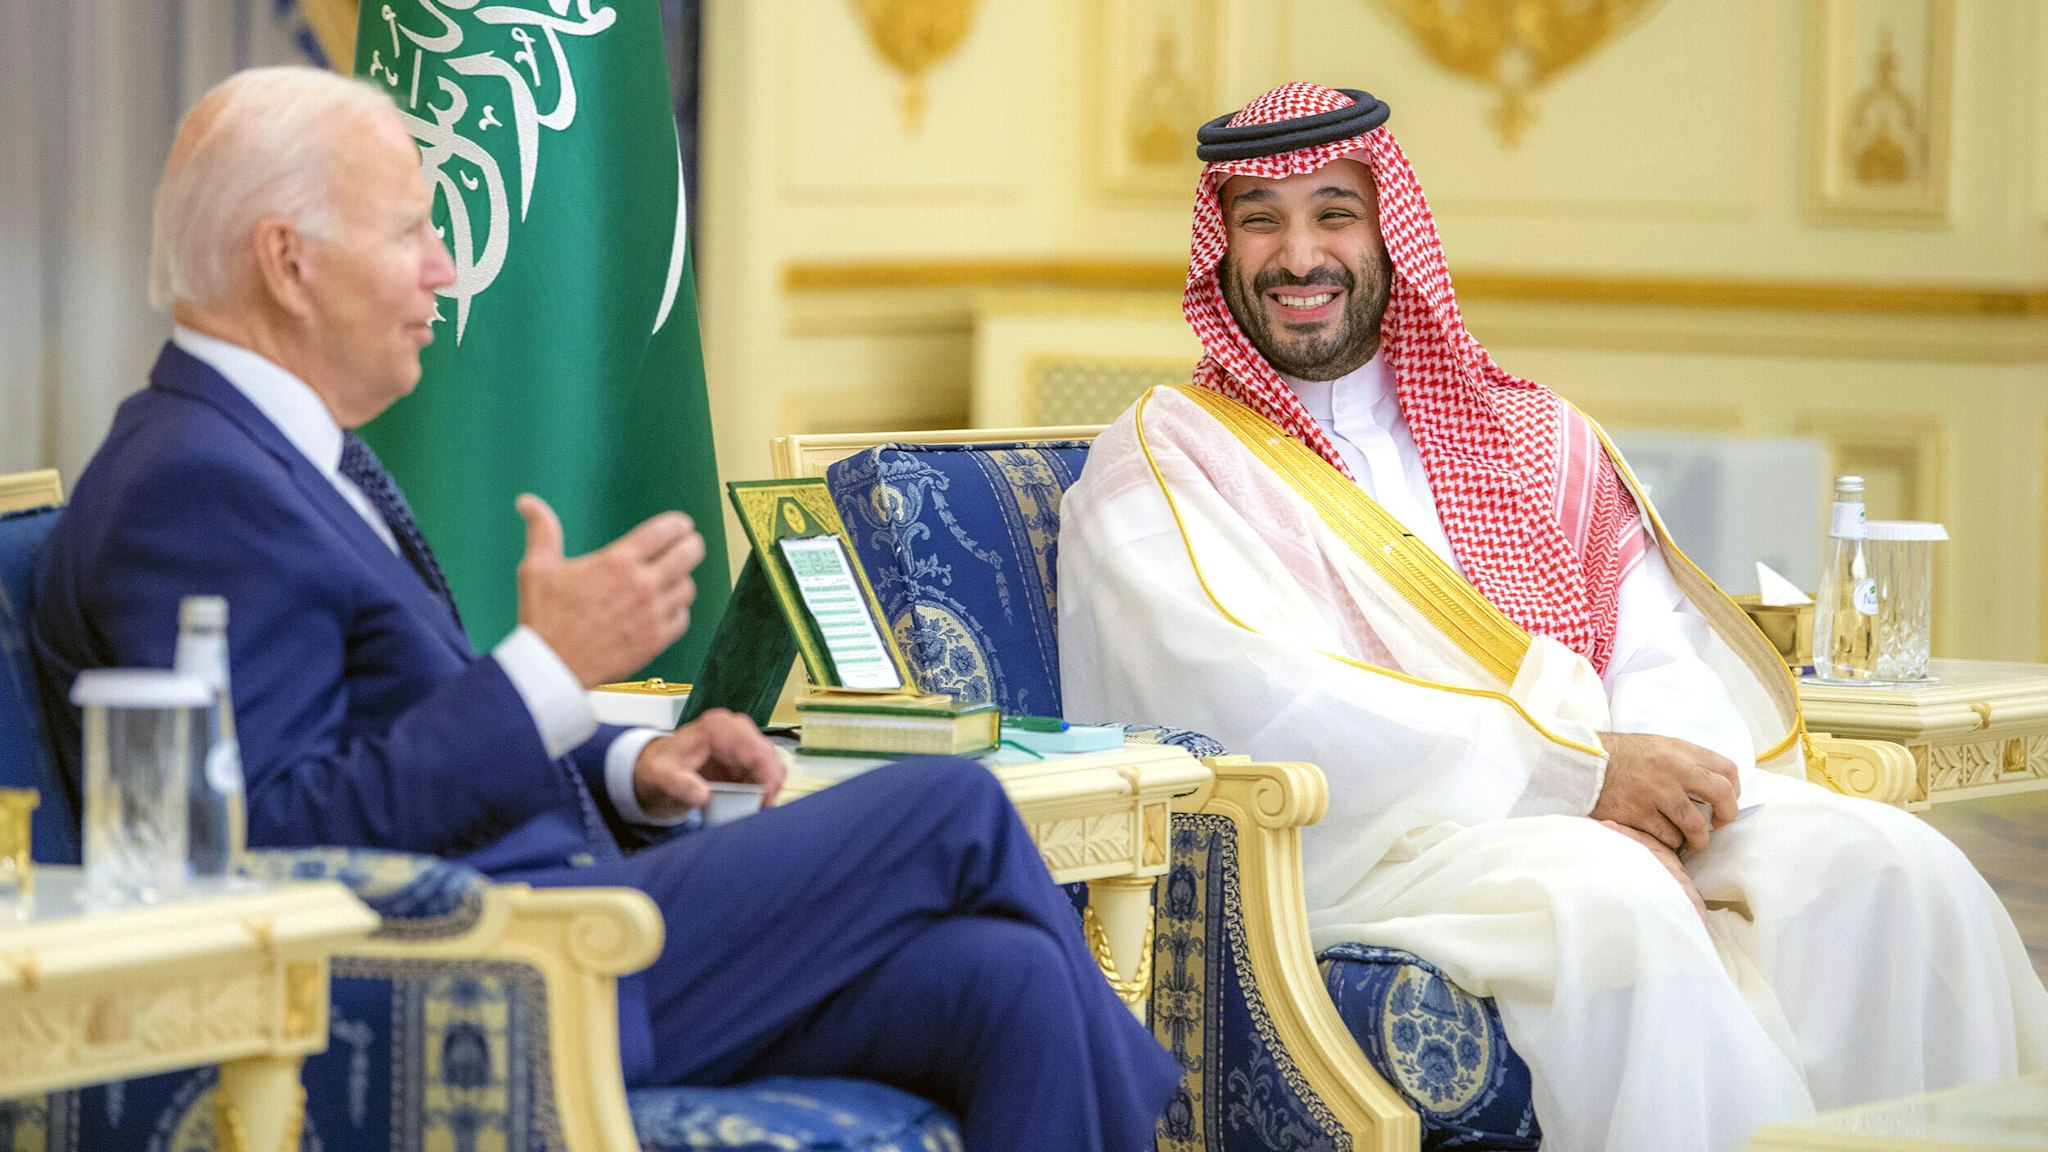 JEDDAH, SAUDI ARABIA - JULY 15: (----EDITORIAL USE ONLY â MANDATORY CREDIT - "ROYAL COURT OF SAUDI ARABIA / HANDOUT" - NO MARKETING NO ADVERTISING CAMPAIGNS - DISTRIBUTED AS A SERVICE TO CLIENTS----) US President Joe Biden (L) meets Saudi Arabian Crown Prince Mohammed bin Salman (R) at Alsalam Royal Palace in Jeddah, Saudi Arabia on July 15, 2022.